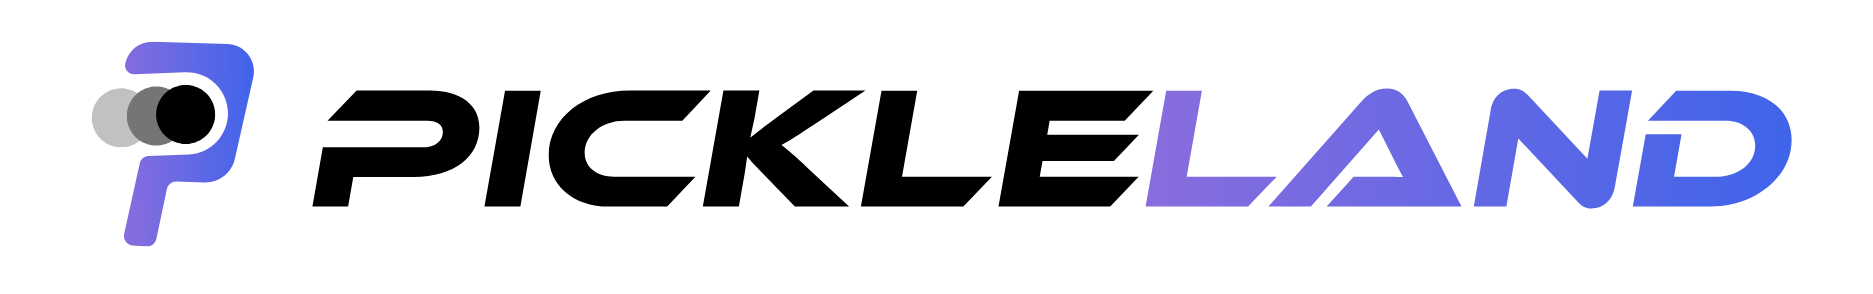 Pickleland official logo